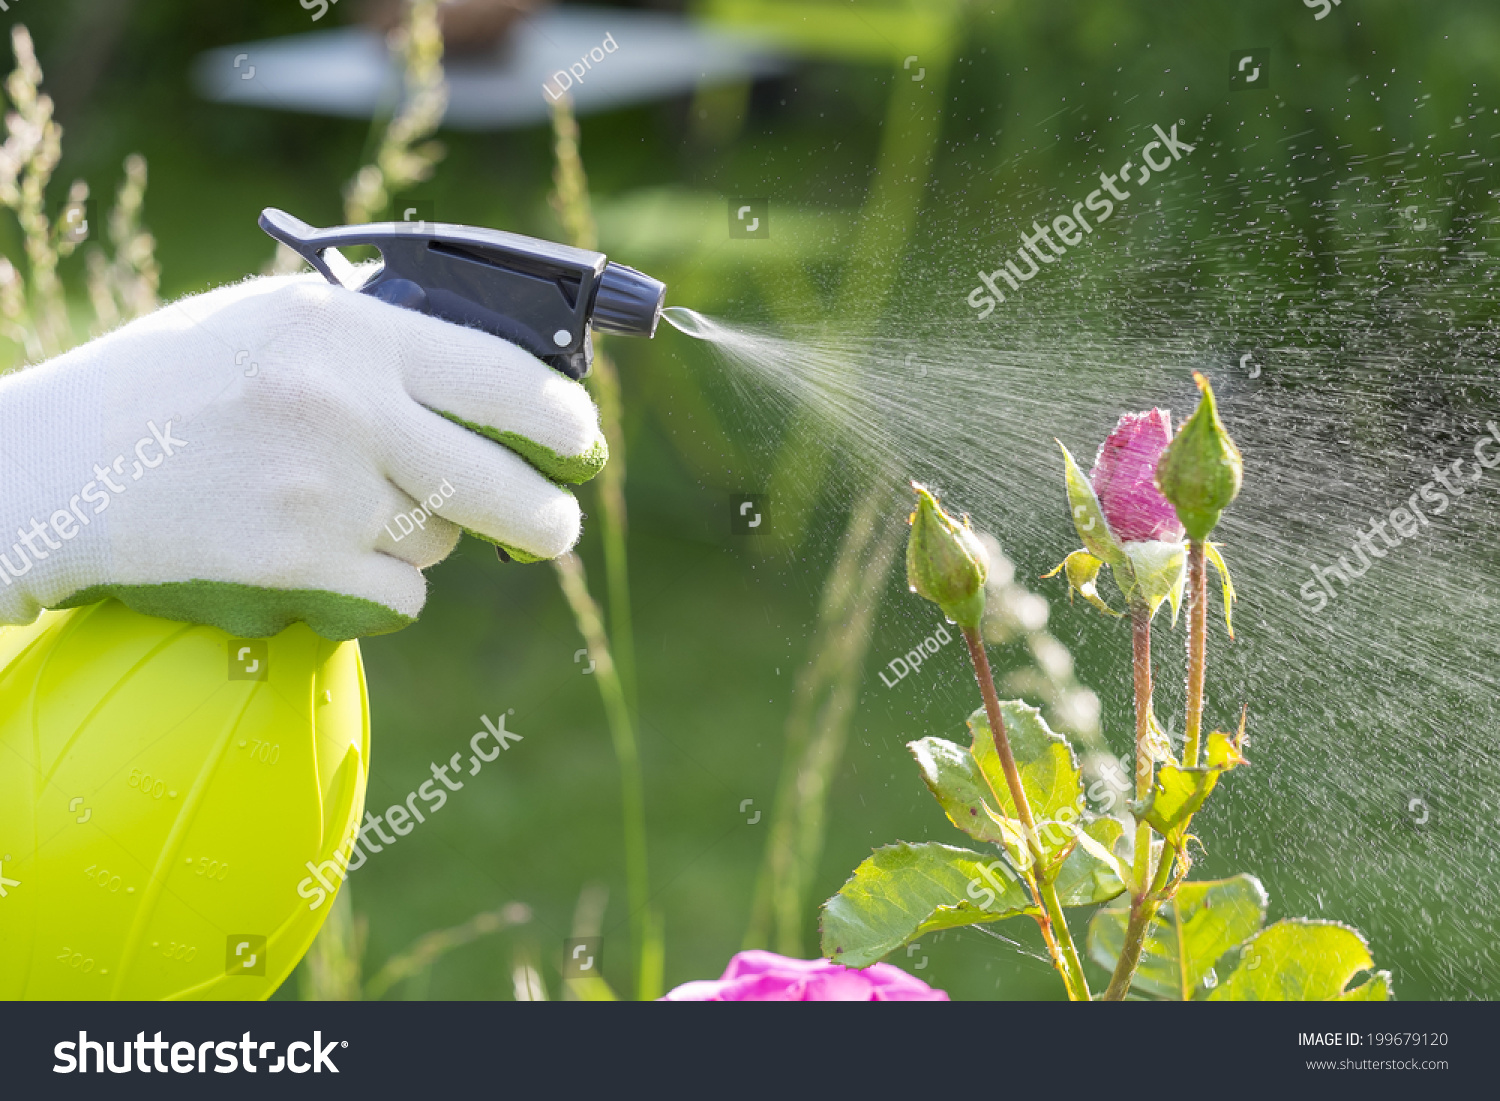 Woman spraying flowers in the garden #199679120